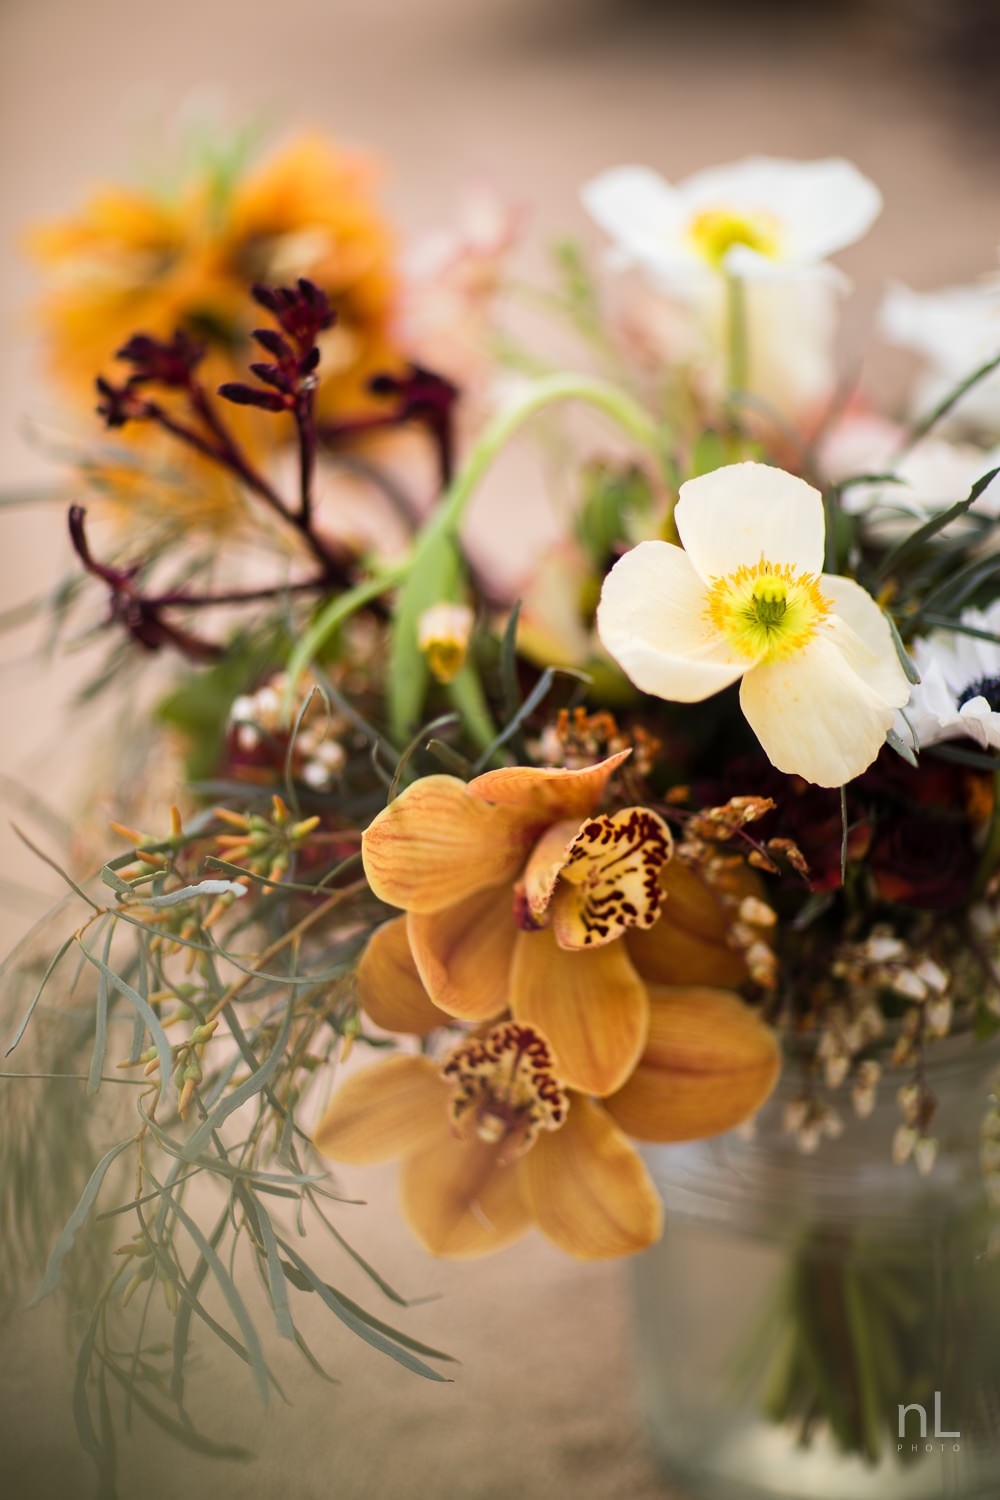 joshua-tree-engagement-wedding-elopement-photography-stylized-photoshoot-beautiful-floral-bouquet-in-vase